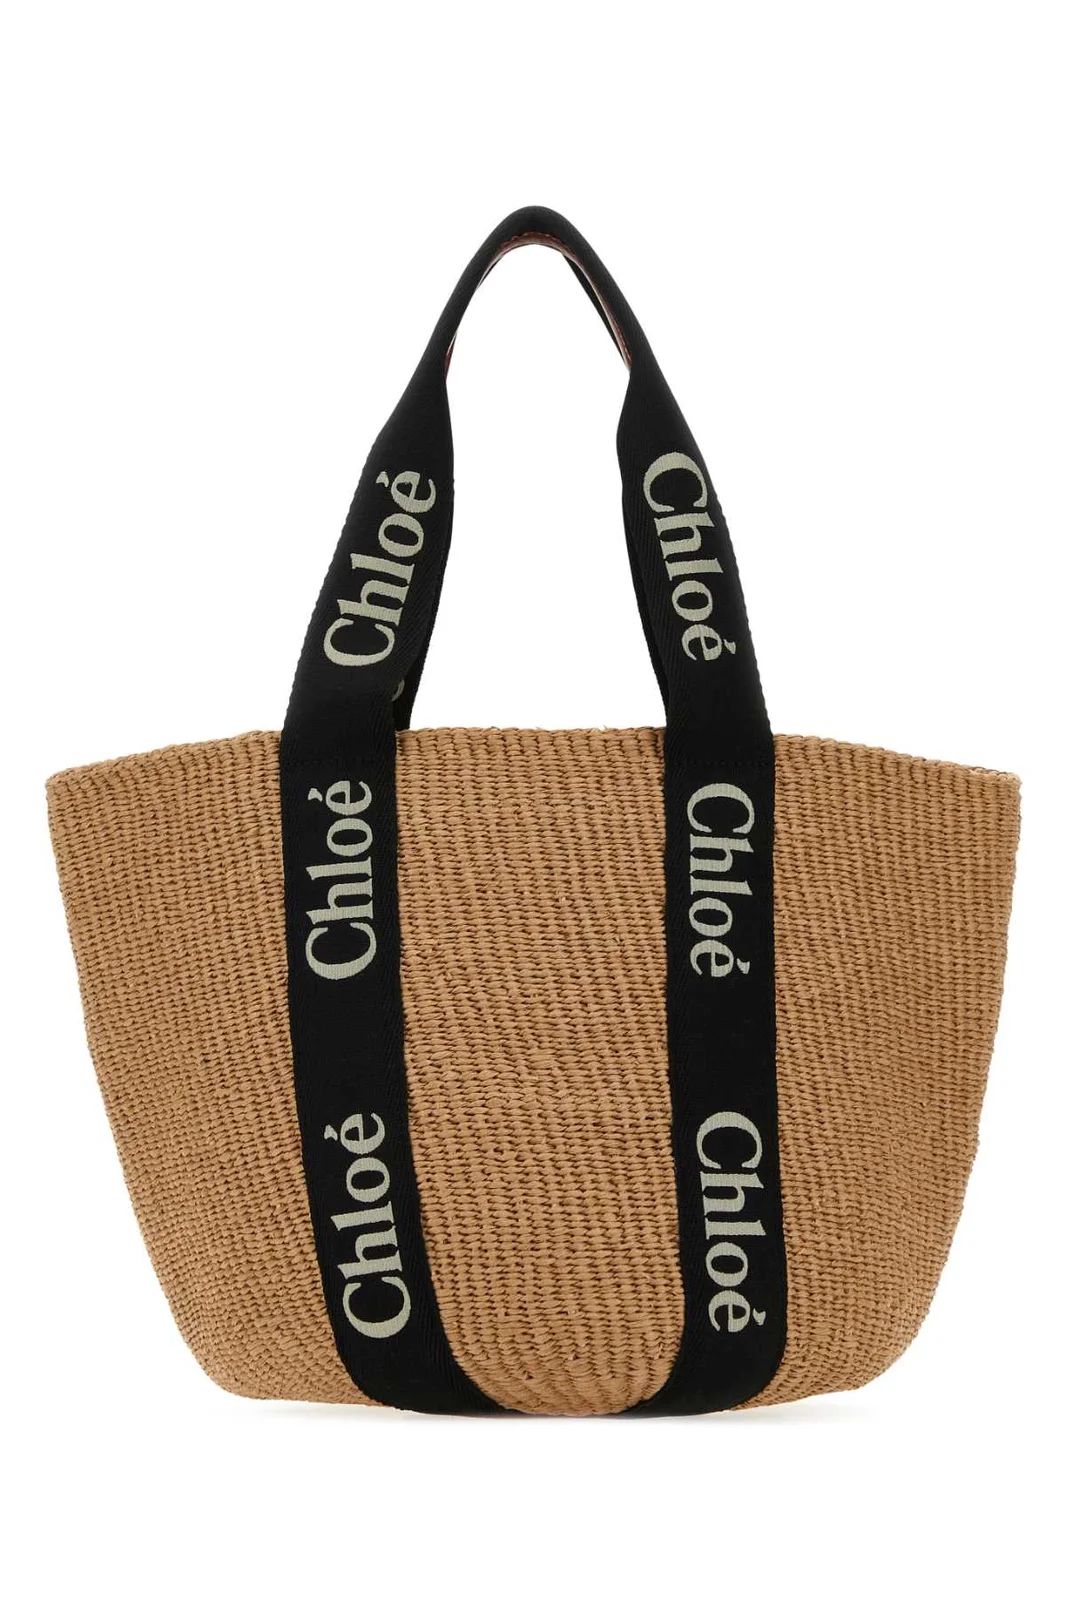 Chloé Woody Large Basket Bag | Cettire Global